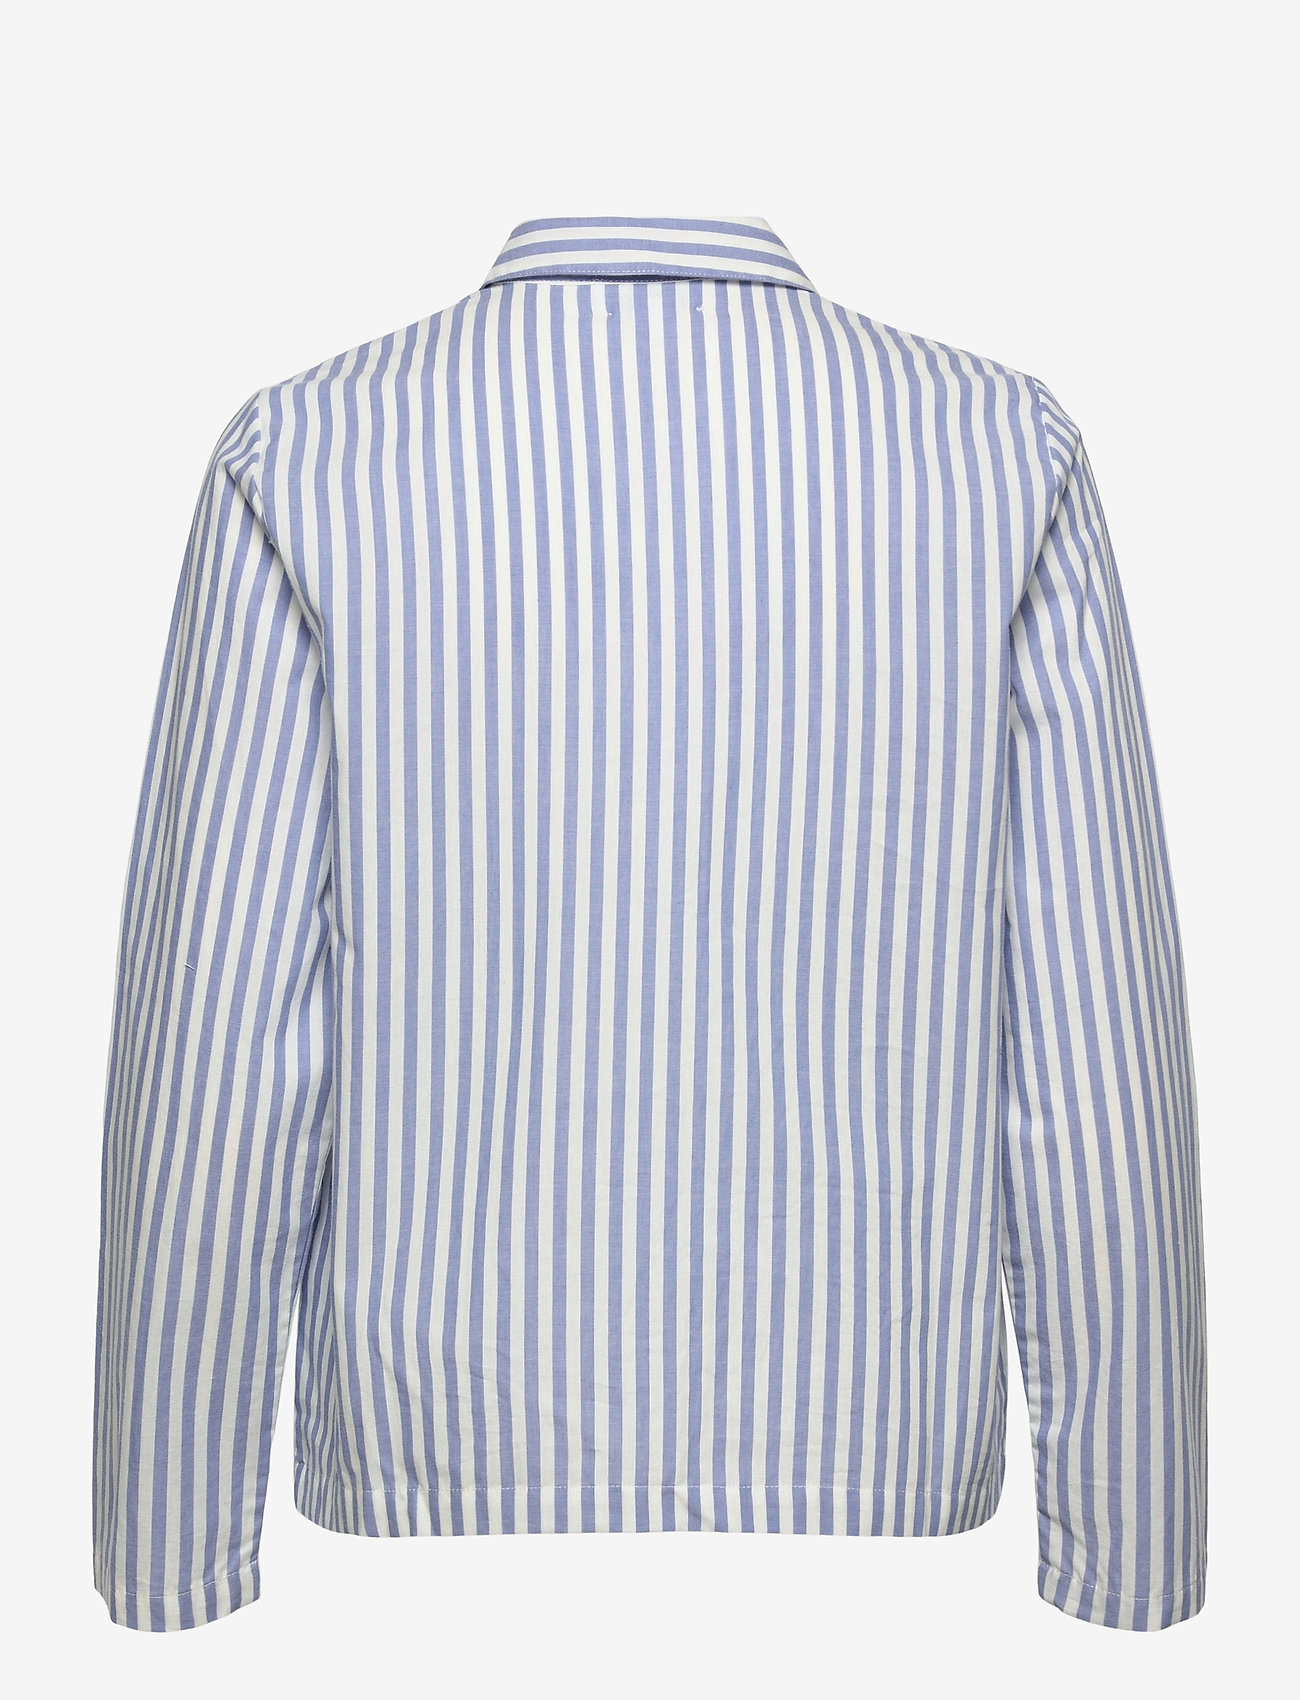 Toggi Mens Provincetown Striped Shirt 